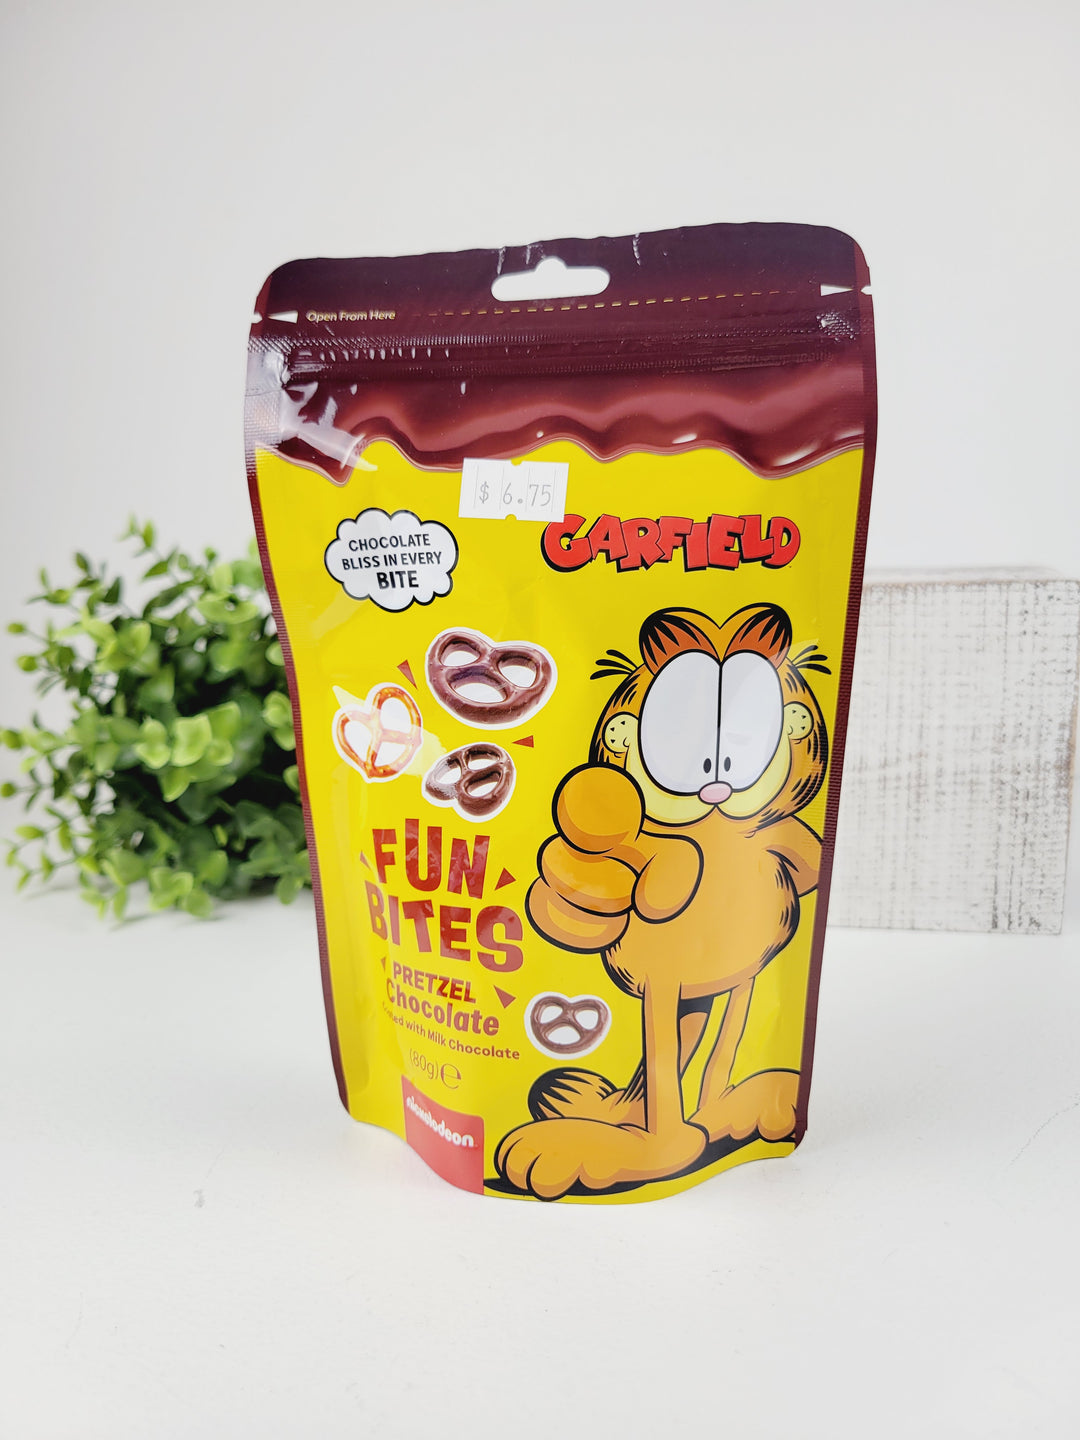 Reel Treats, Garfield Fun Bites (UK)